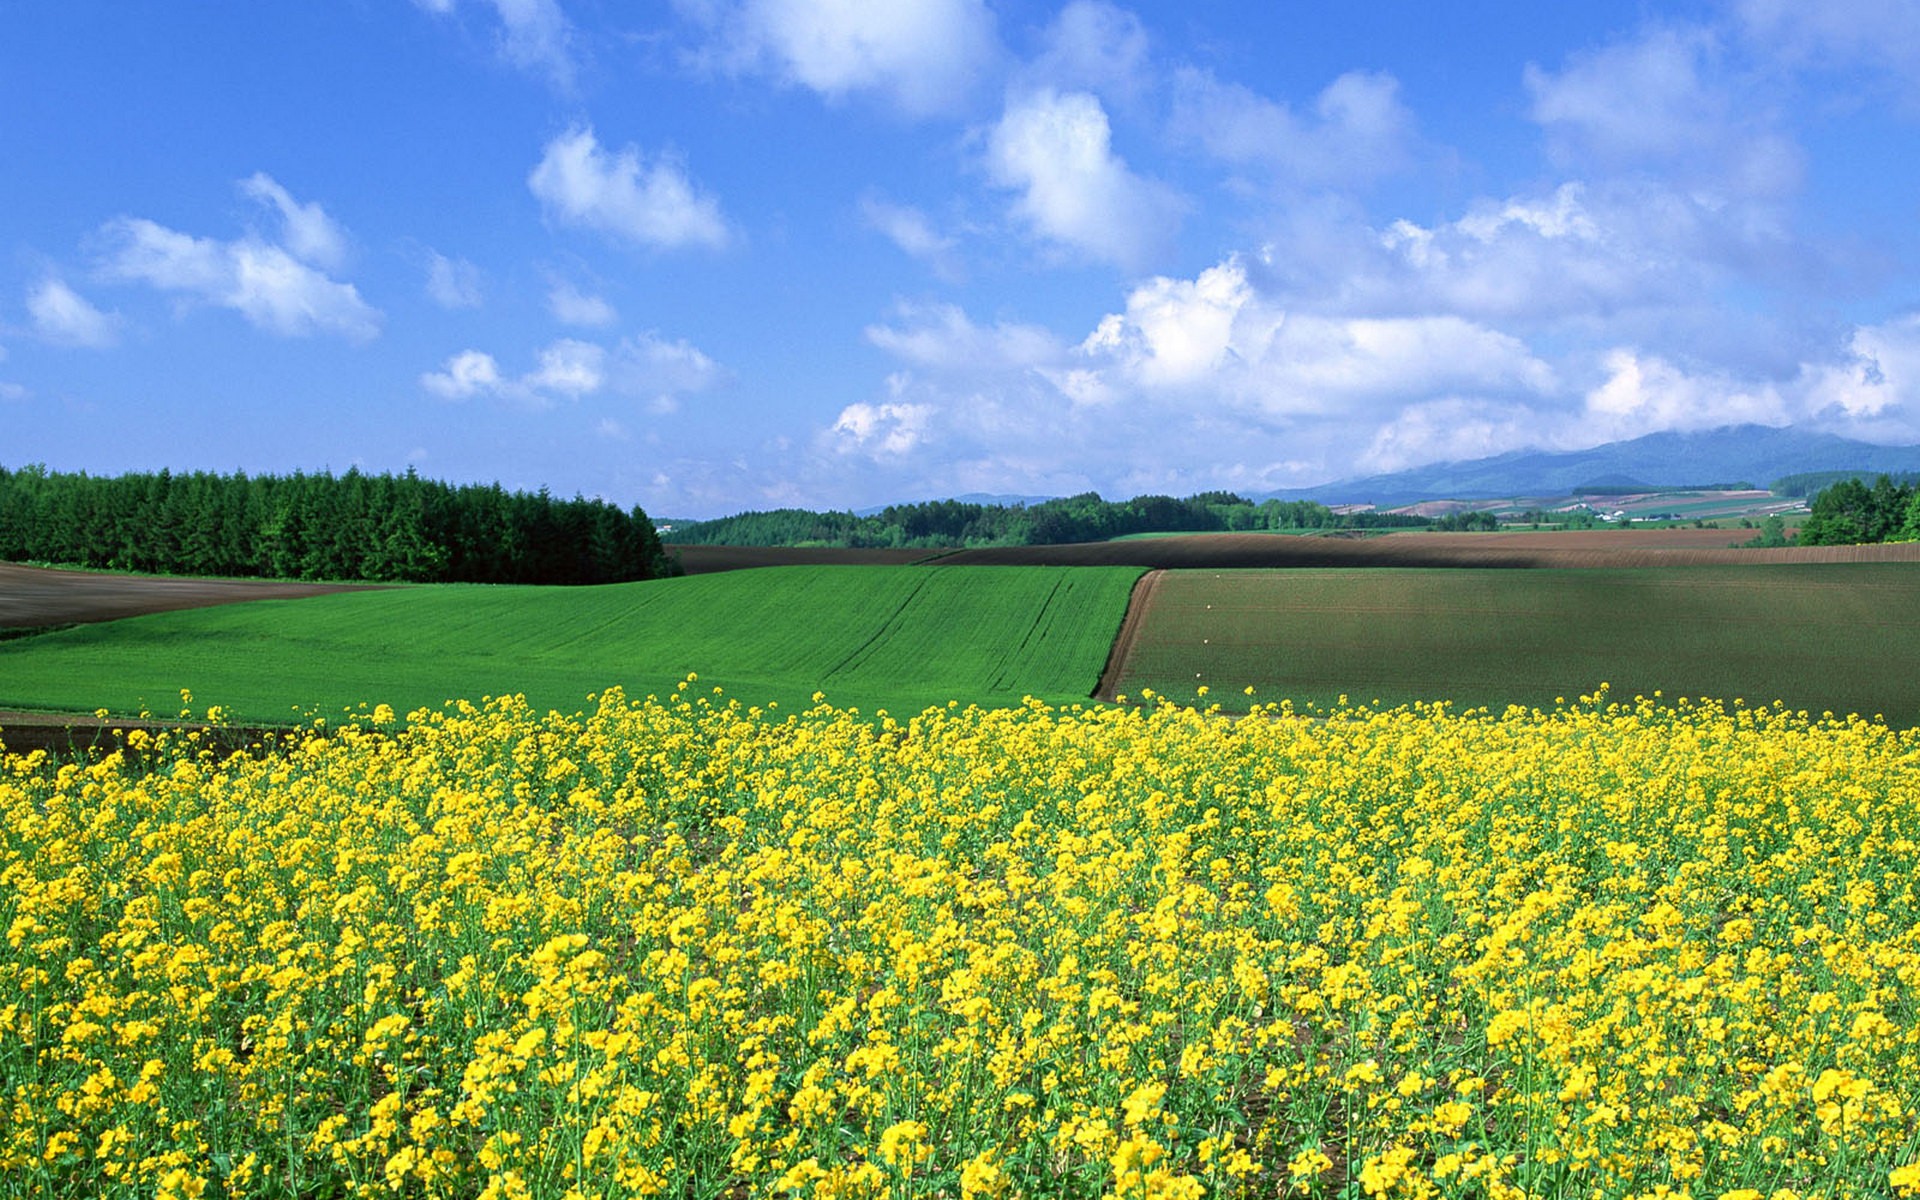 Japan, landscapes, nature, fields - desktop wallpaper